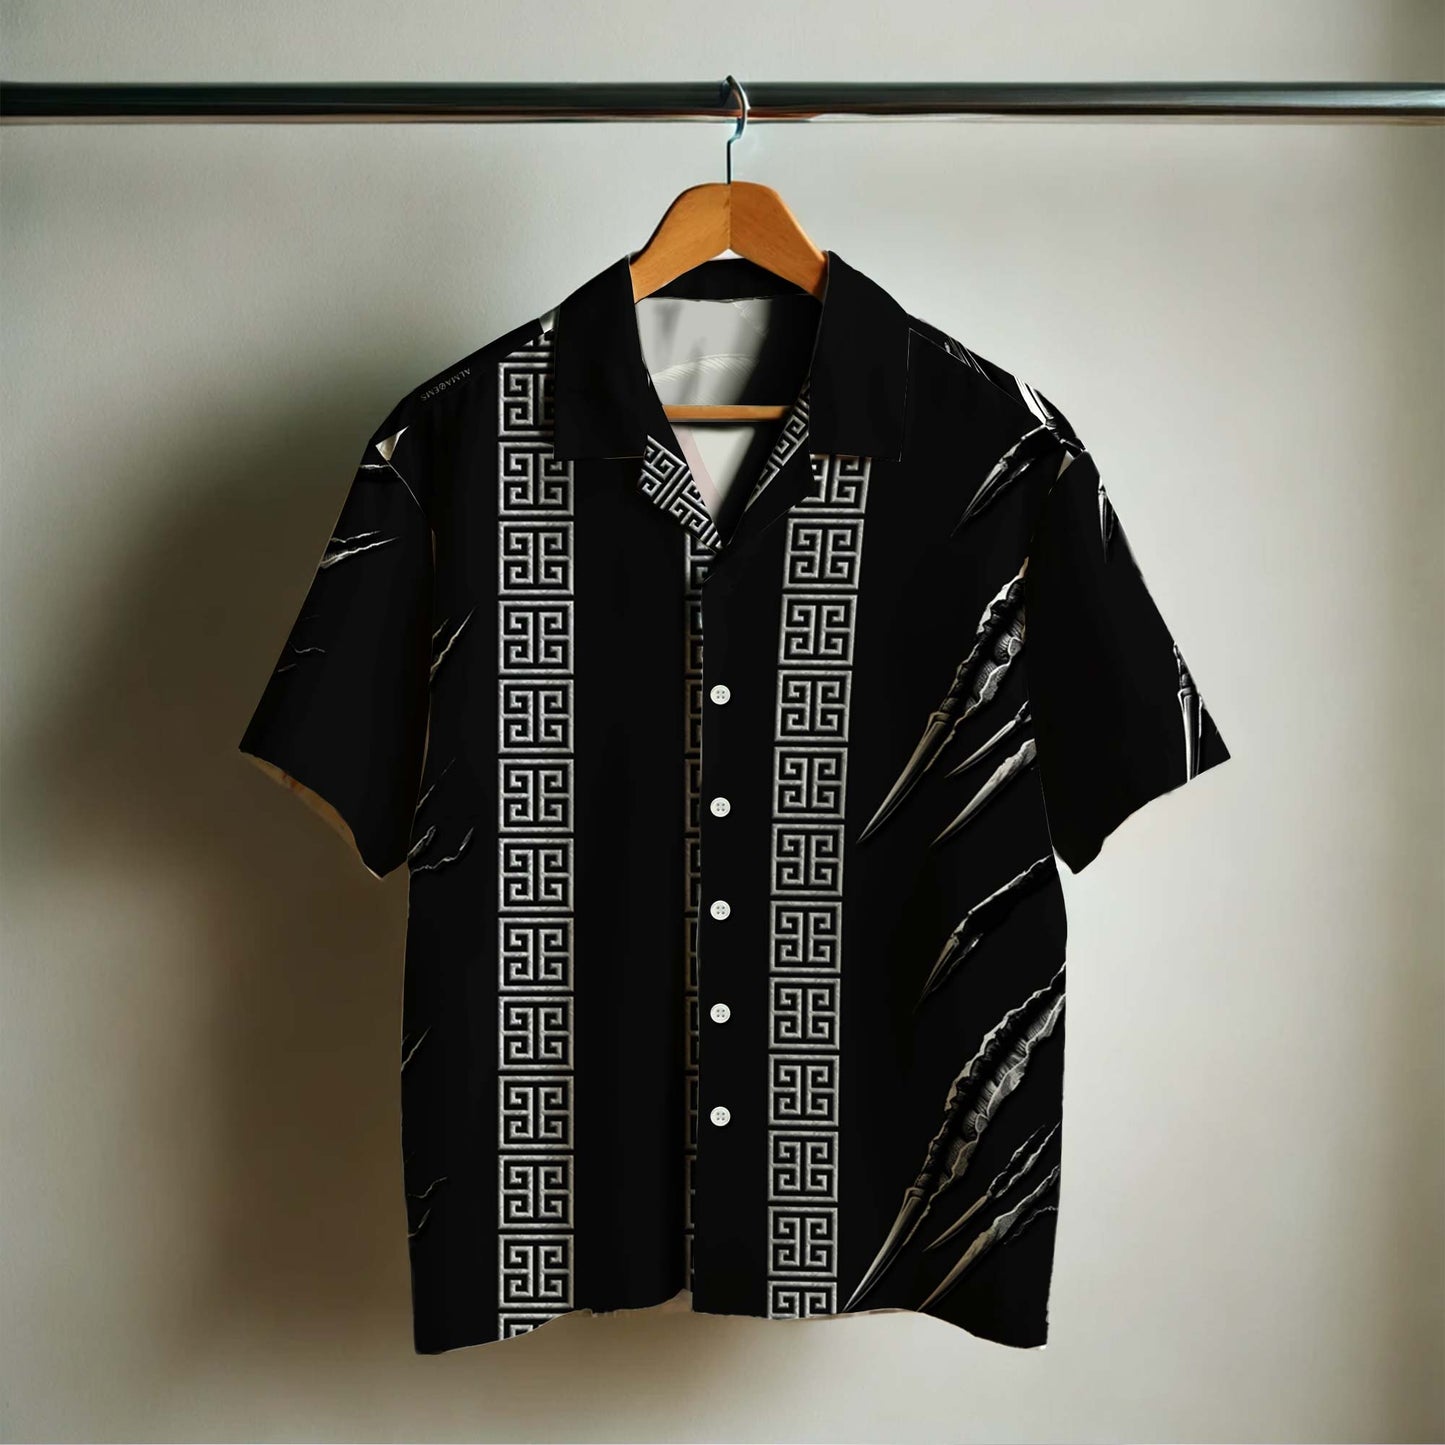 El Jefe - Personalized Unisex Hawaiian Shirt - HW_MX03